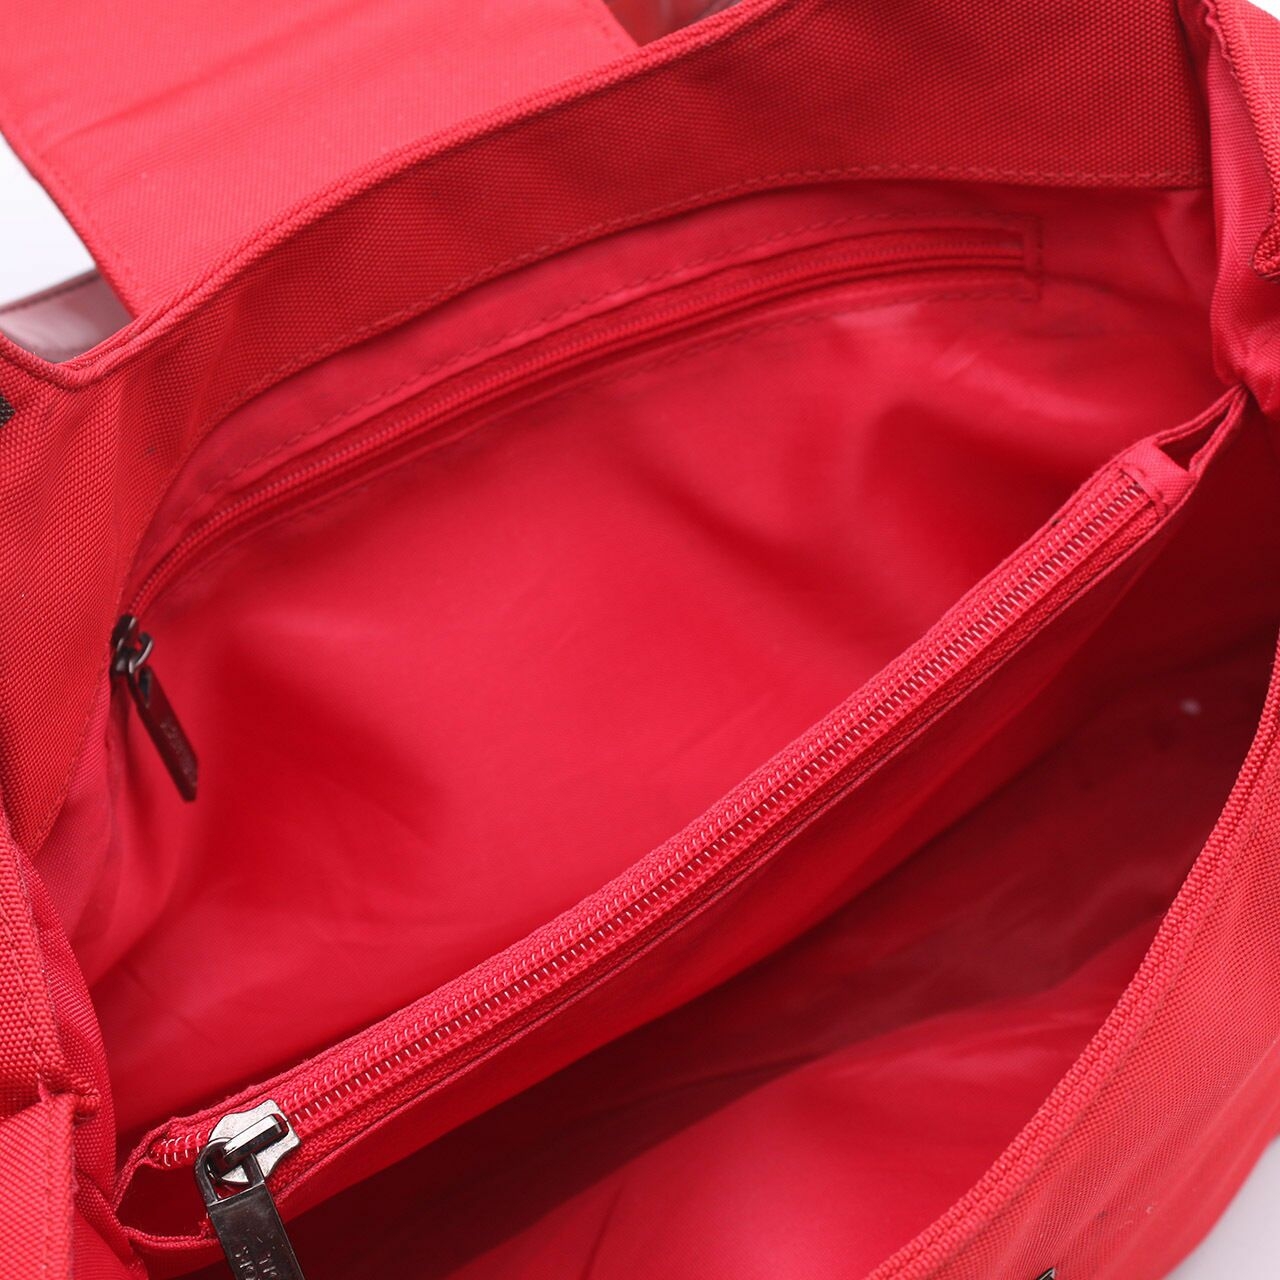 United Colors Of Benetton Red Shoulder Bag